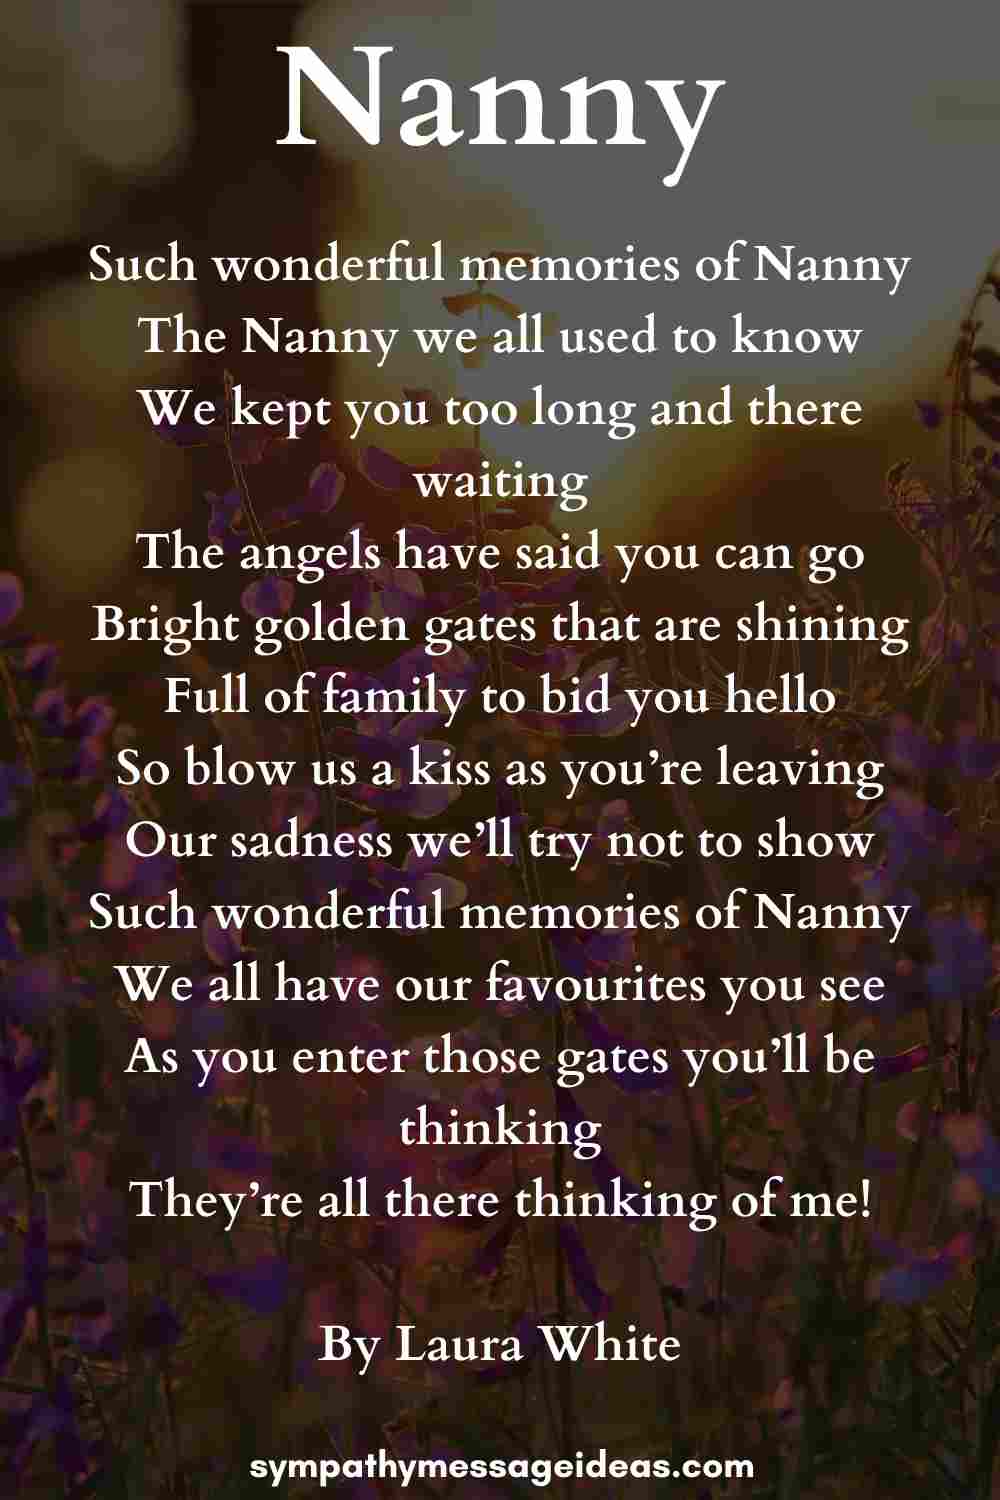 nanny funeral poem